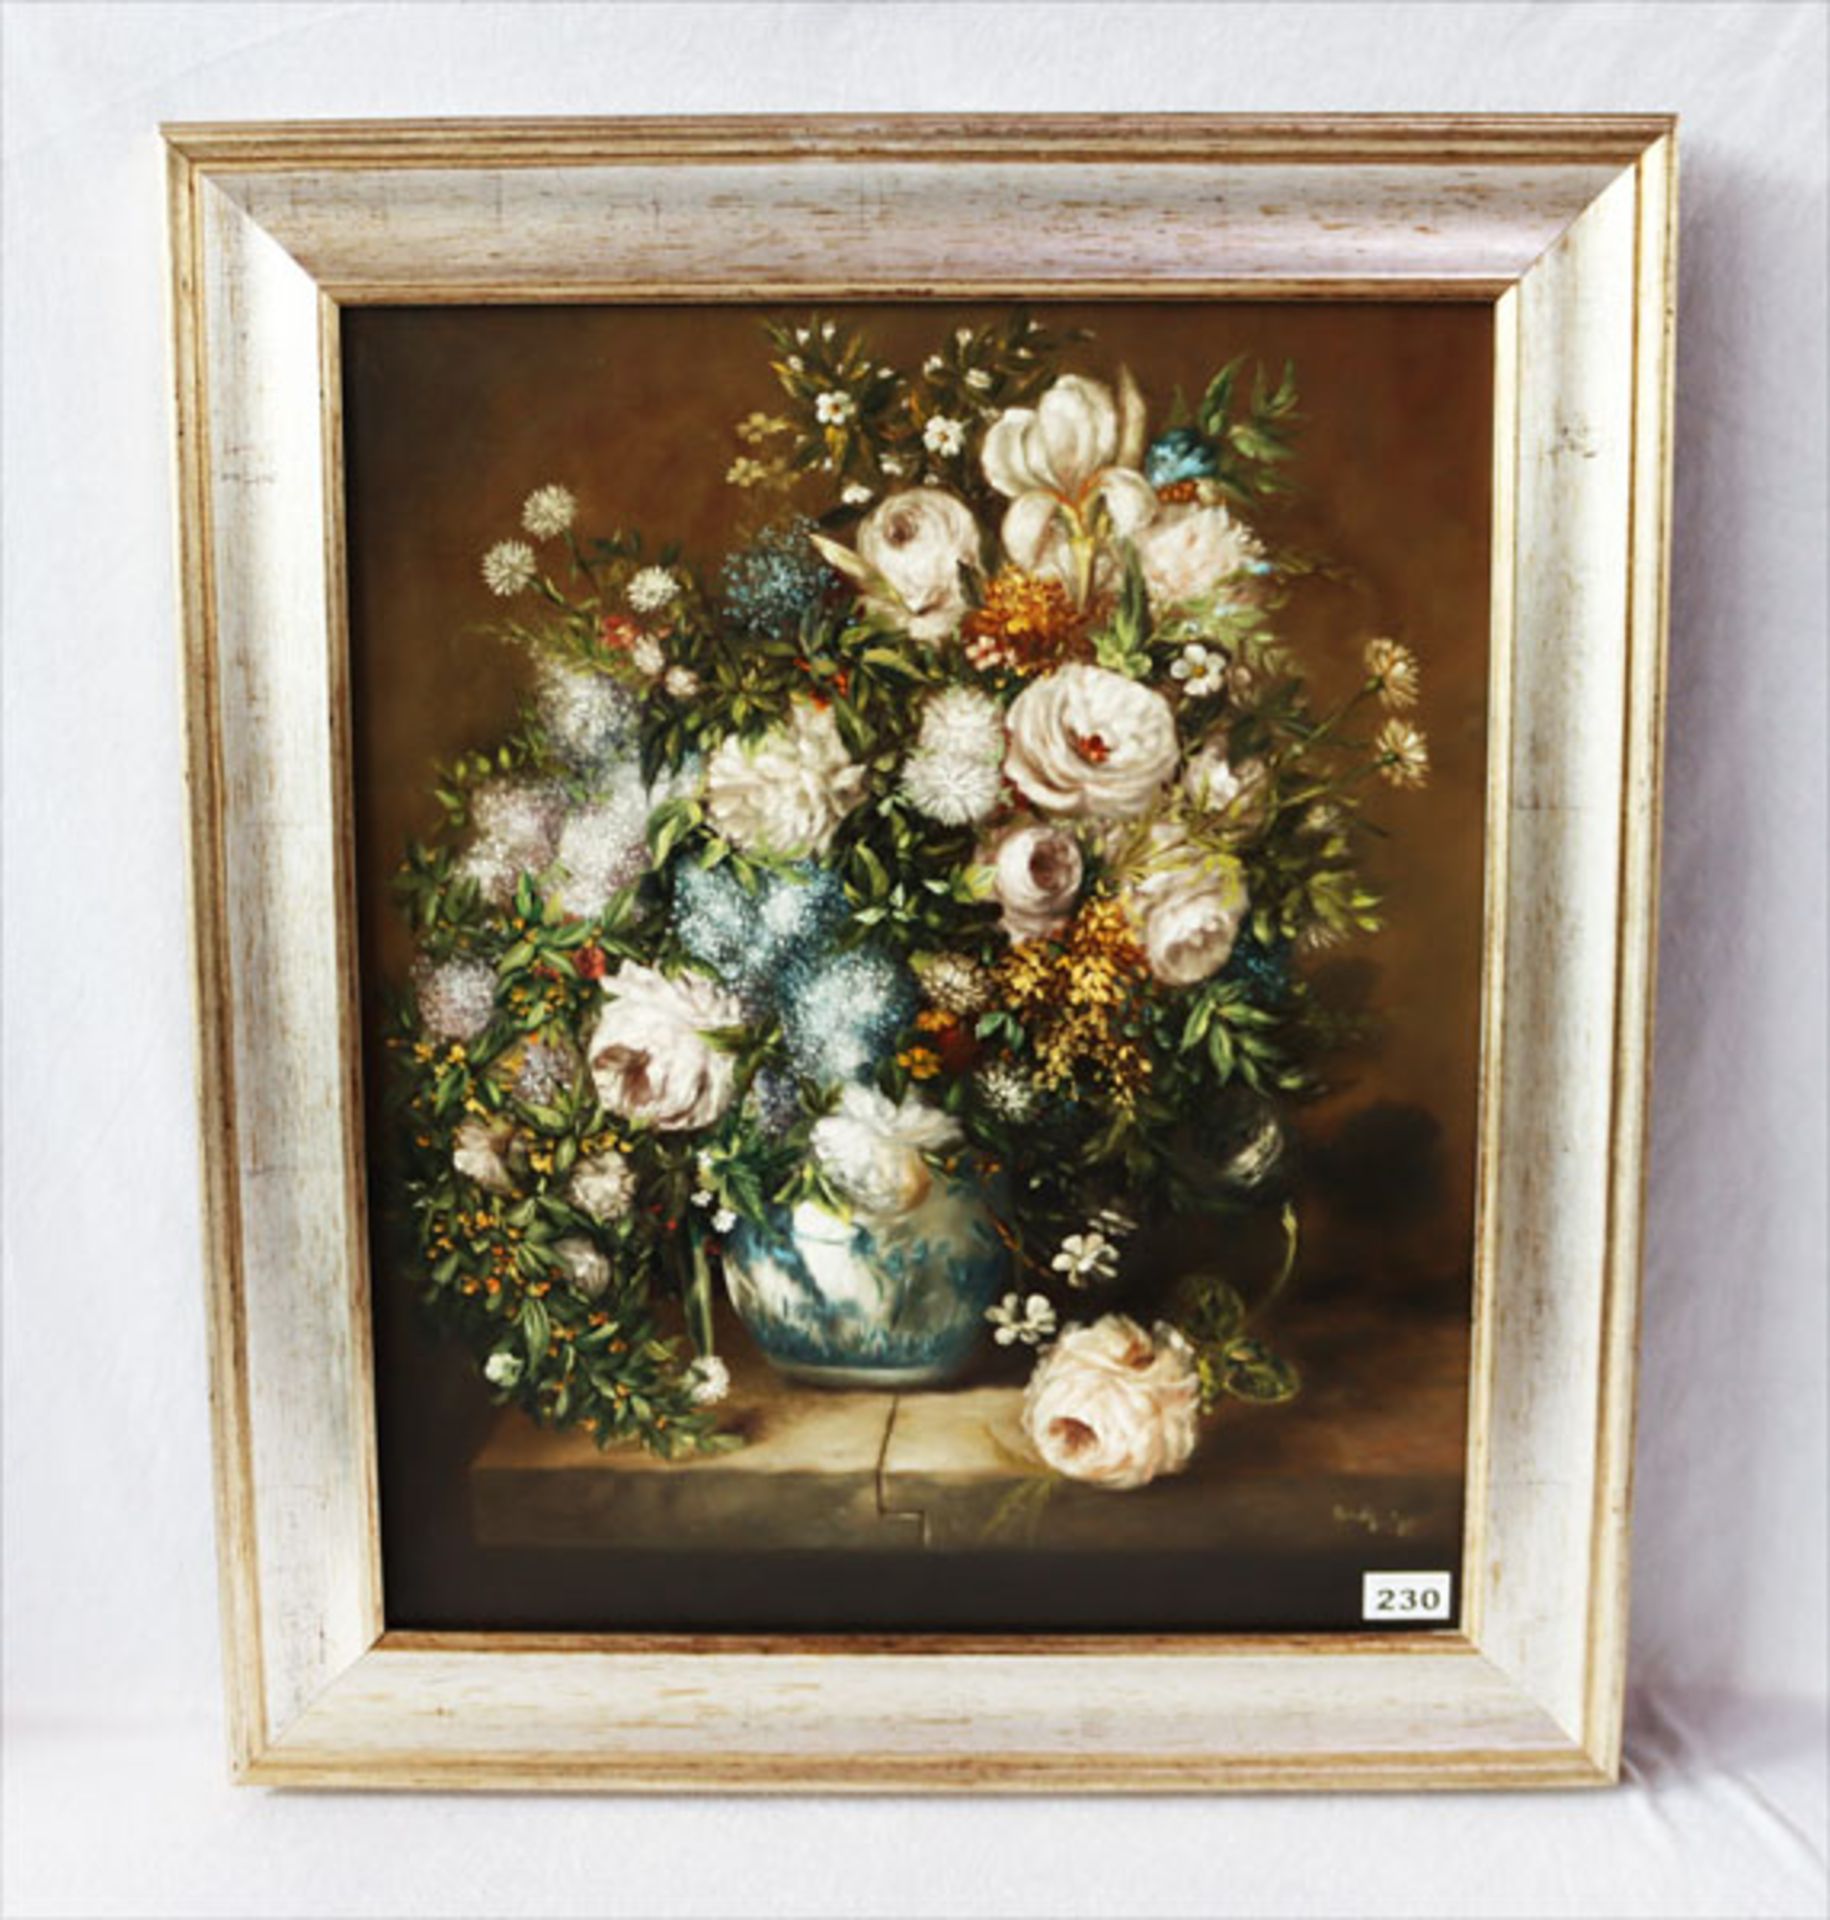 Gemälde ÖL/LW 'Blumenstrauß in Vase', signiert Herdin 81, Radtke, * 1943 Korsze/Polen, tätig in